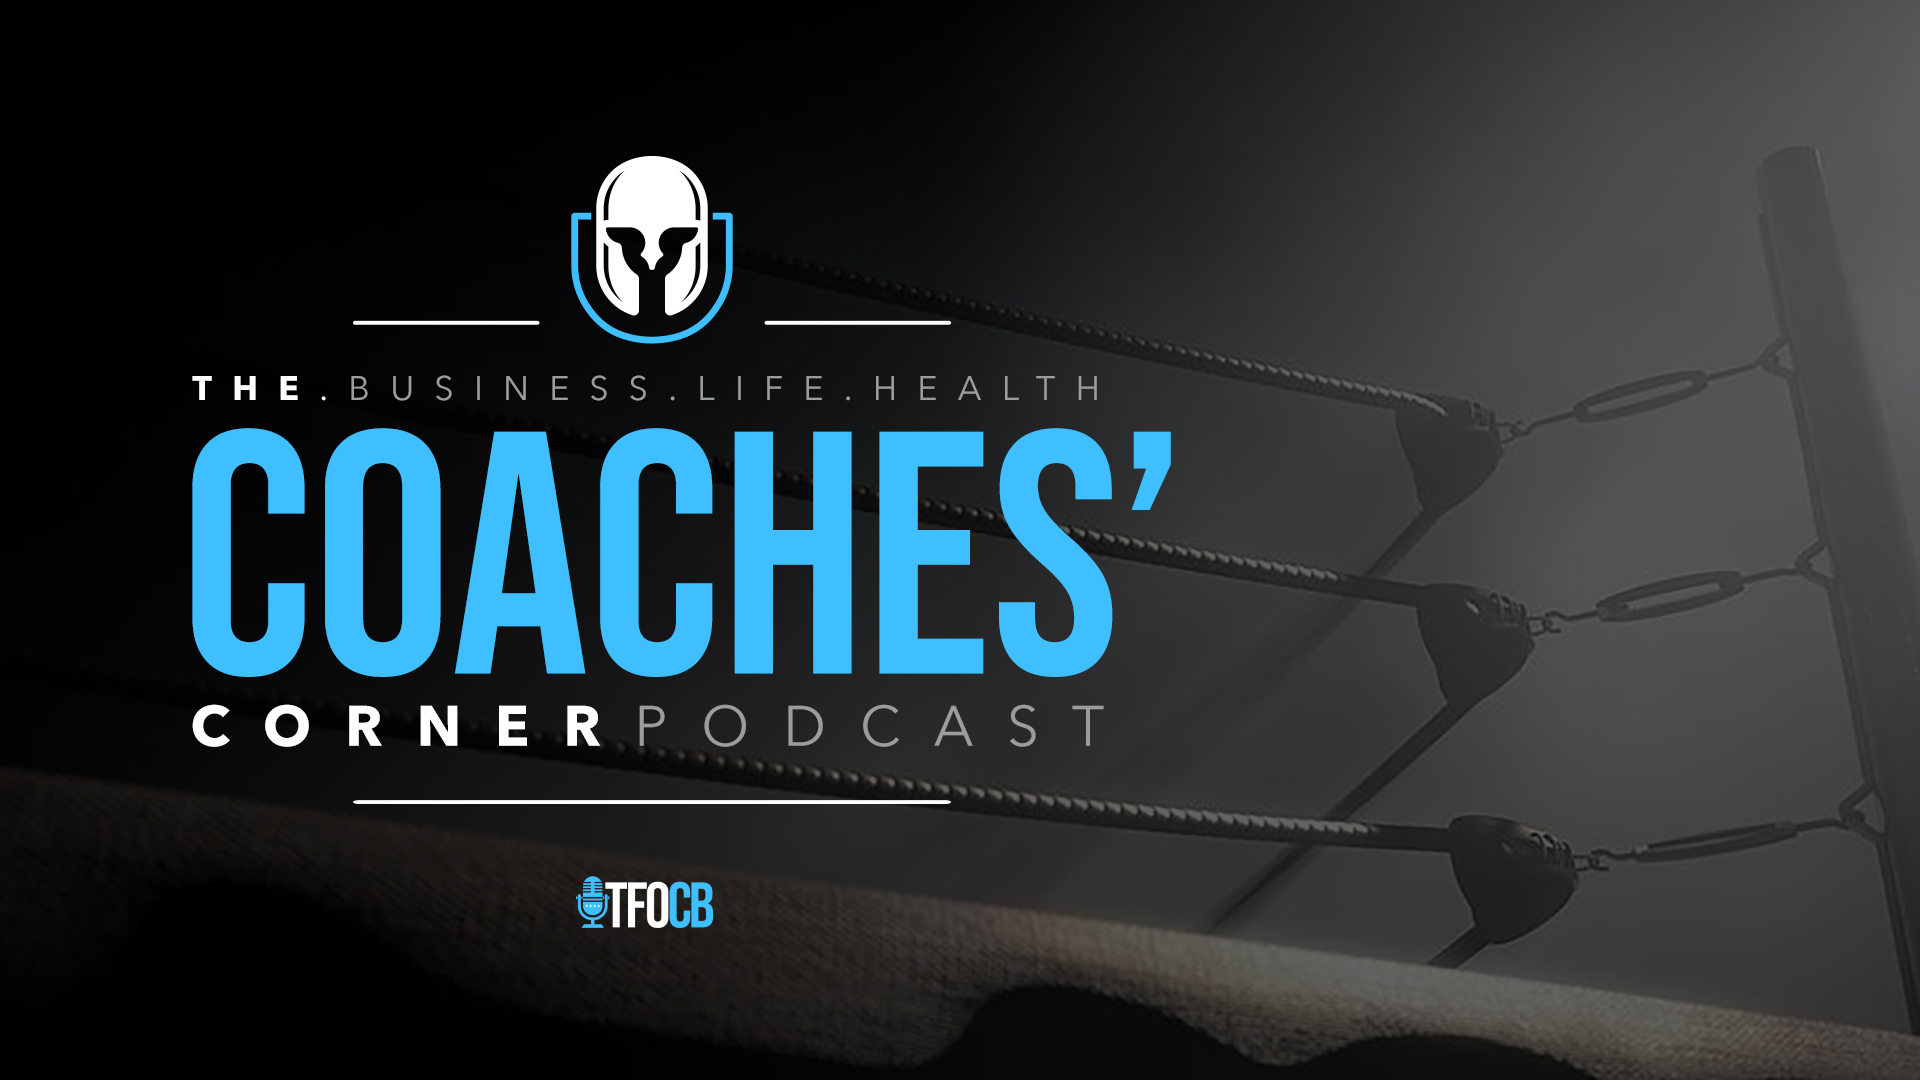 The Coaches' Corner Podcast